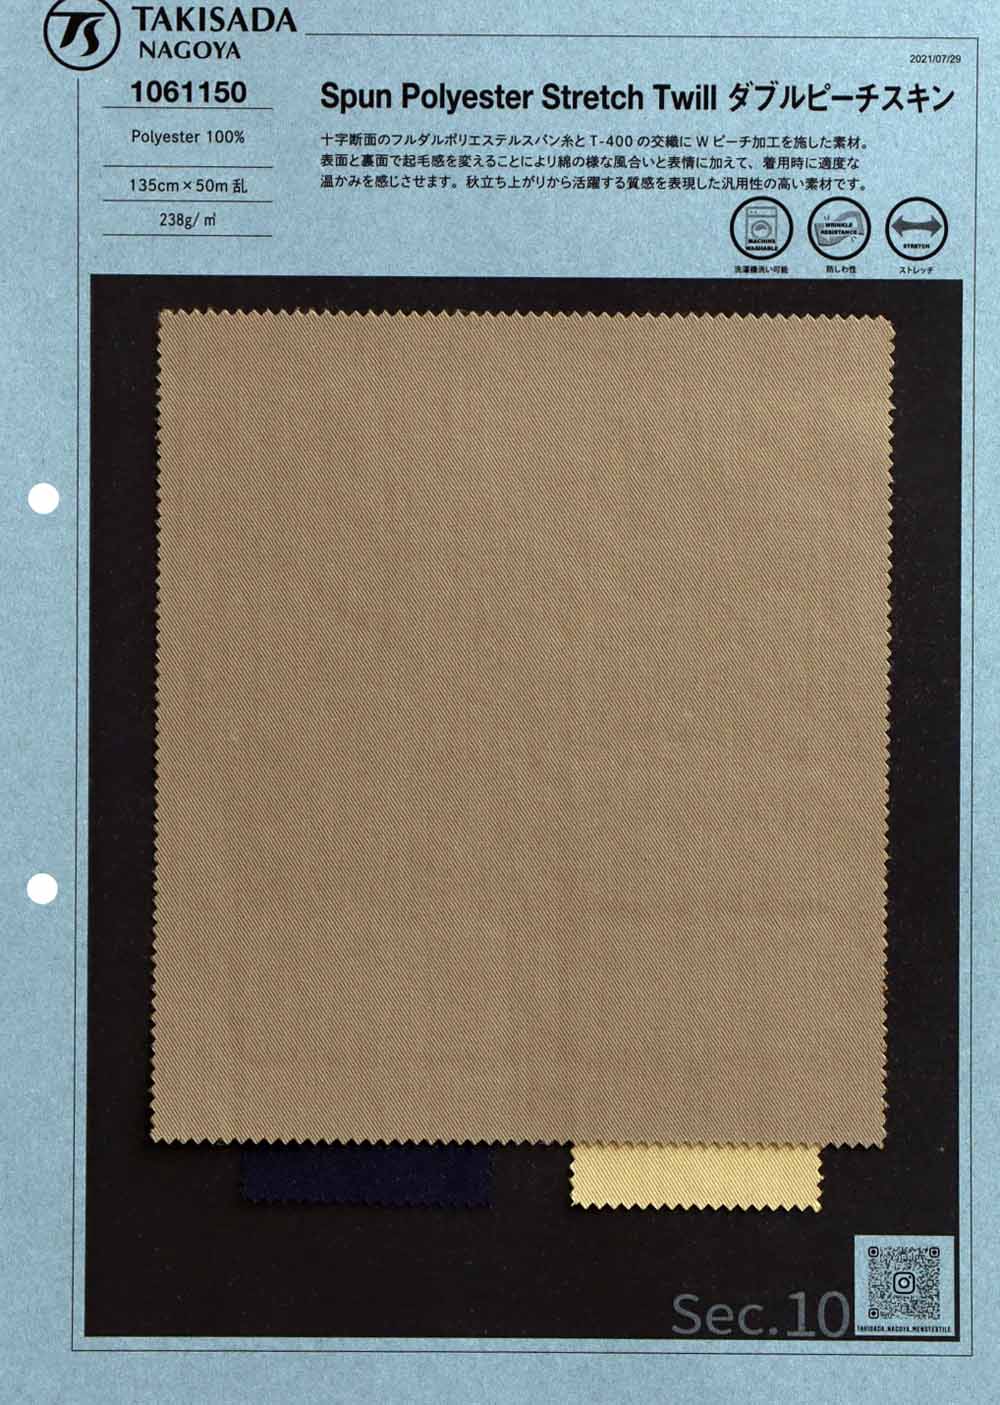 1061150 Spun Polyester Stretch Twill Double Peach Skin[Textile / Fabric] Takisada Nagoya